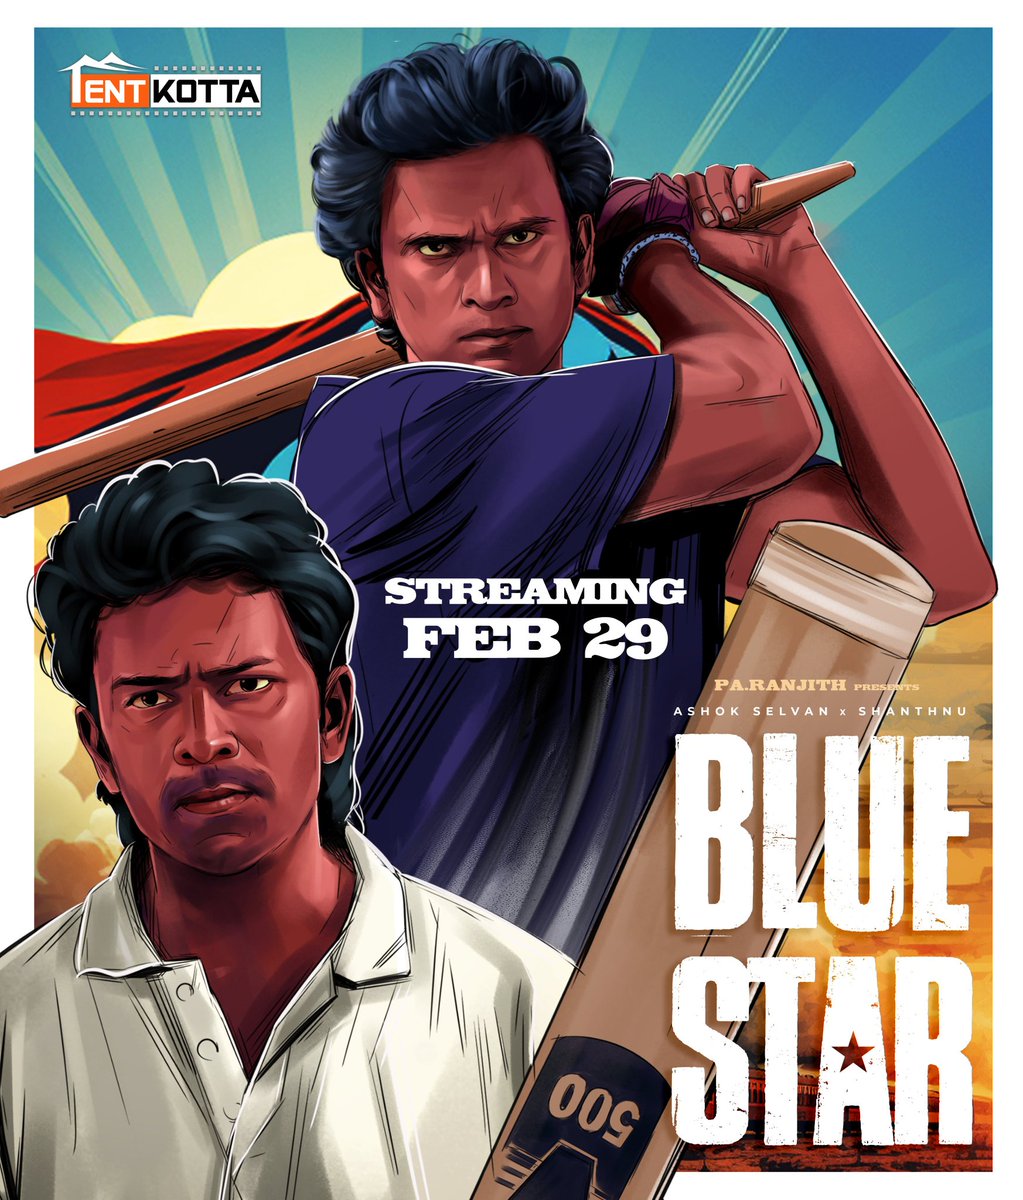 #Bluestar Streaming From Feb 29 On @Tentkotta 

@AshokSelvan  || @imKBRshanthnu  || @iKeerthiPandian  || @prithviactor  || @beemji  #BlueStarOnTentkotta